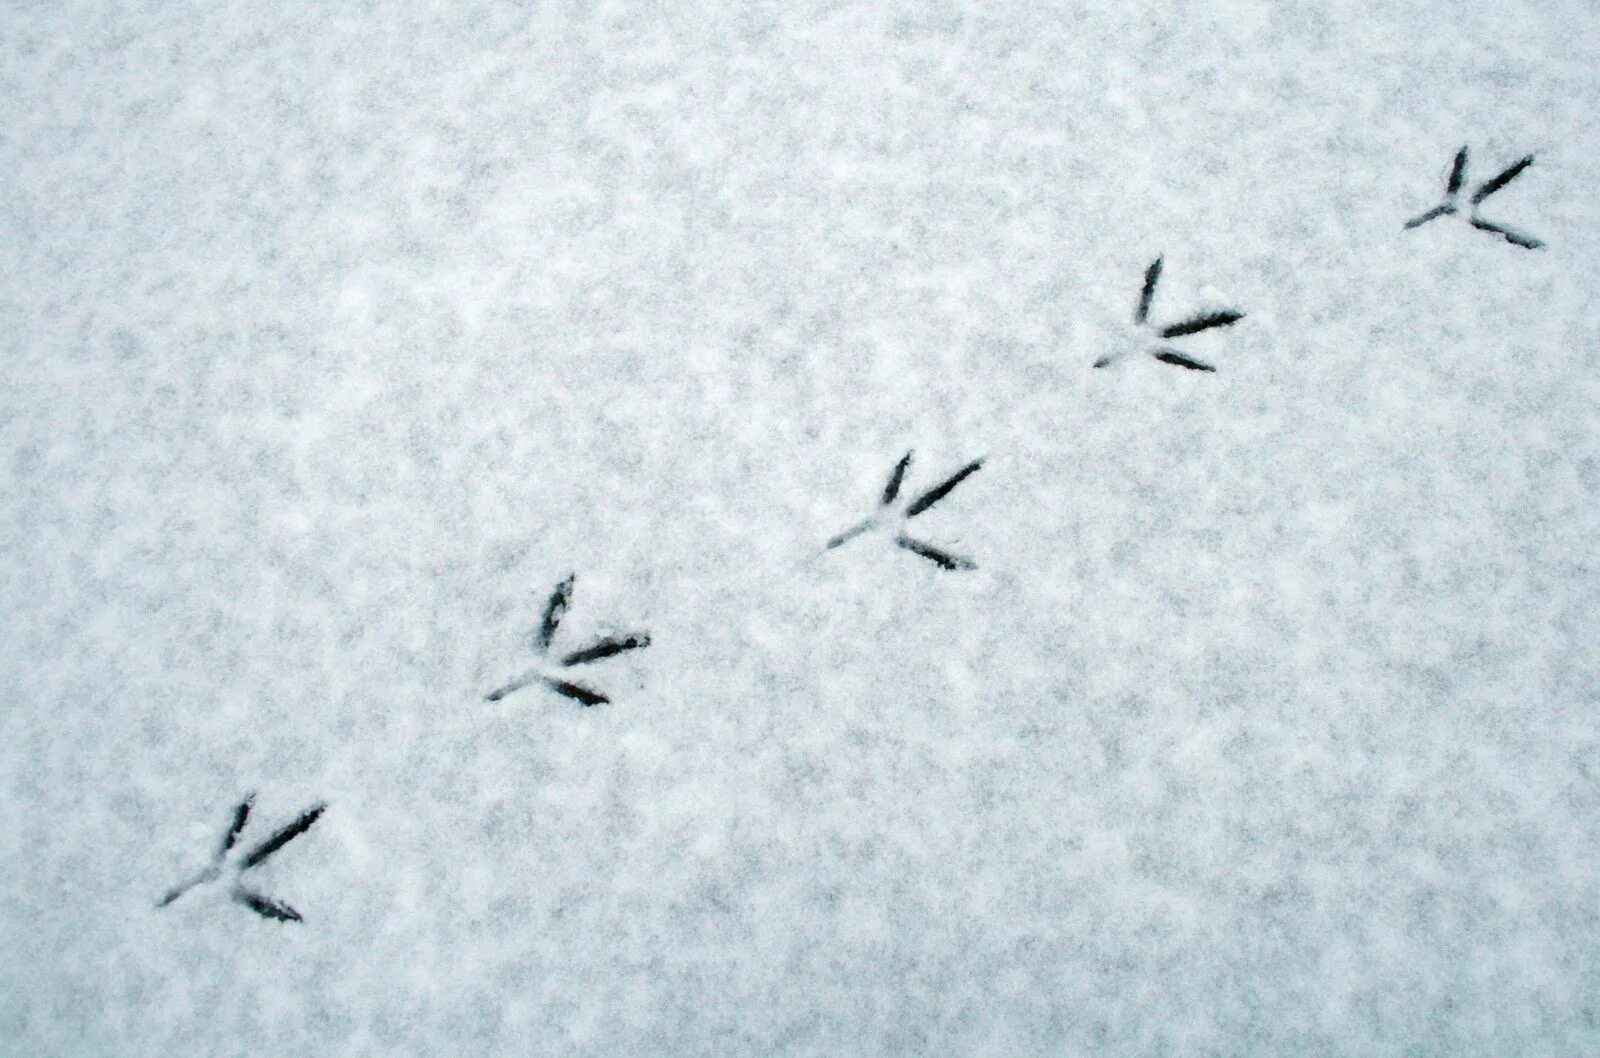 Следы птиц. Следы зимующих птиц. Следы птичек на снегу. Отпечатки птиц на снегу. На снегу видны птичьи следы